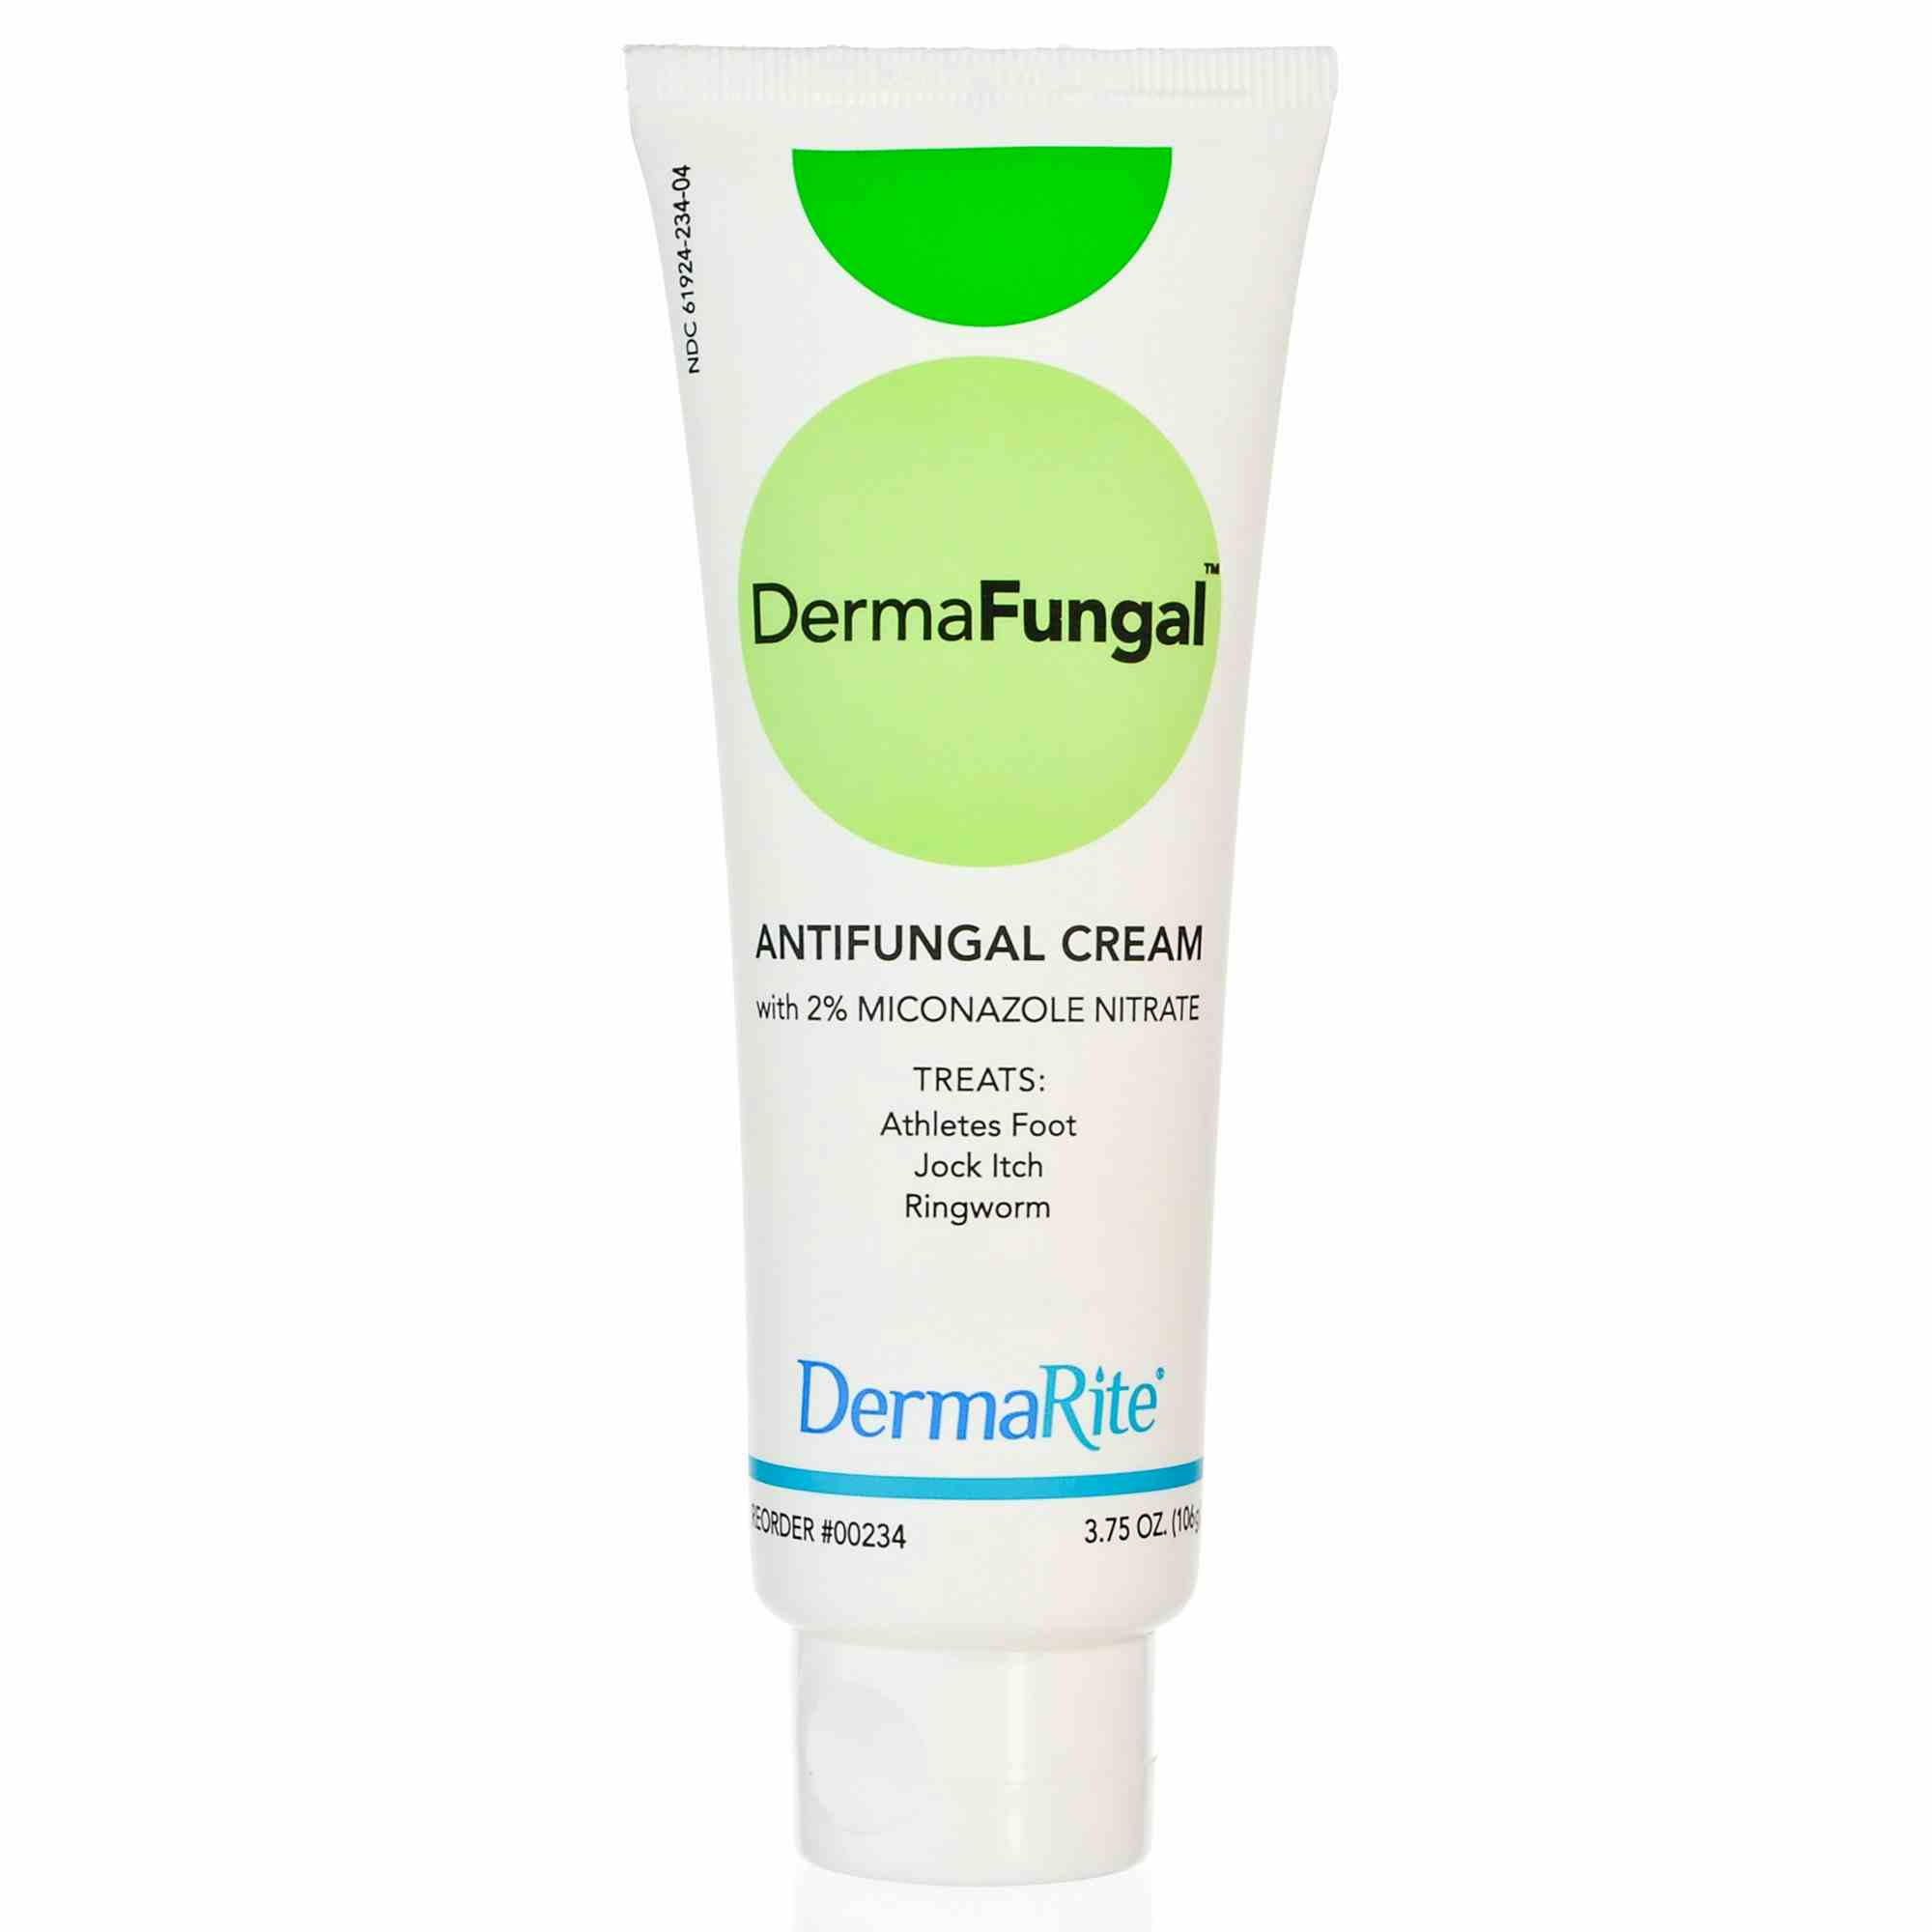 DermaRite DermaFungal Antifungal Cream, 00234, 1 Each